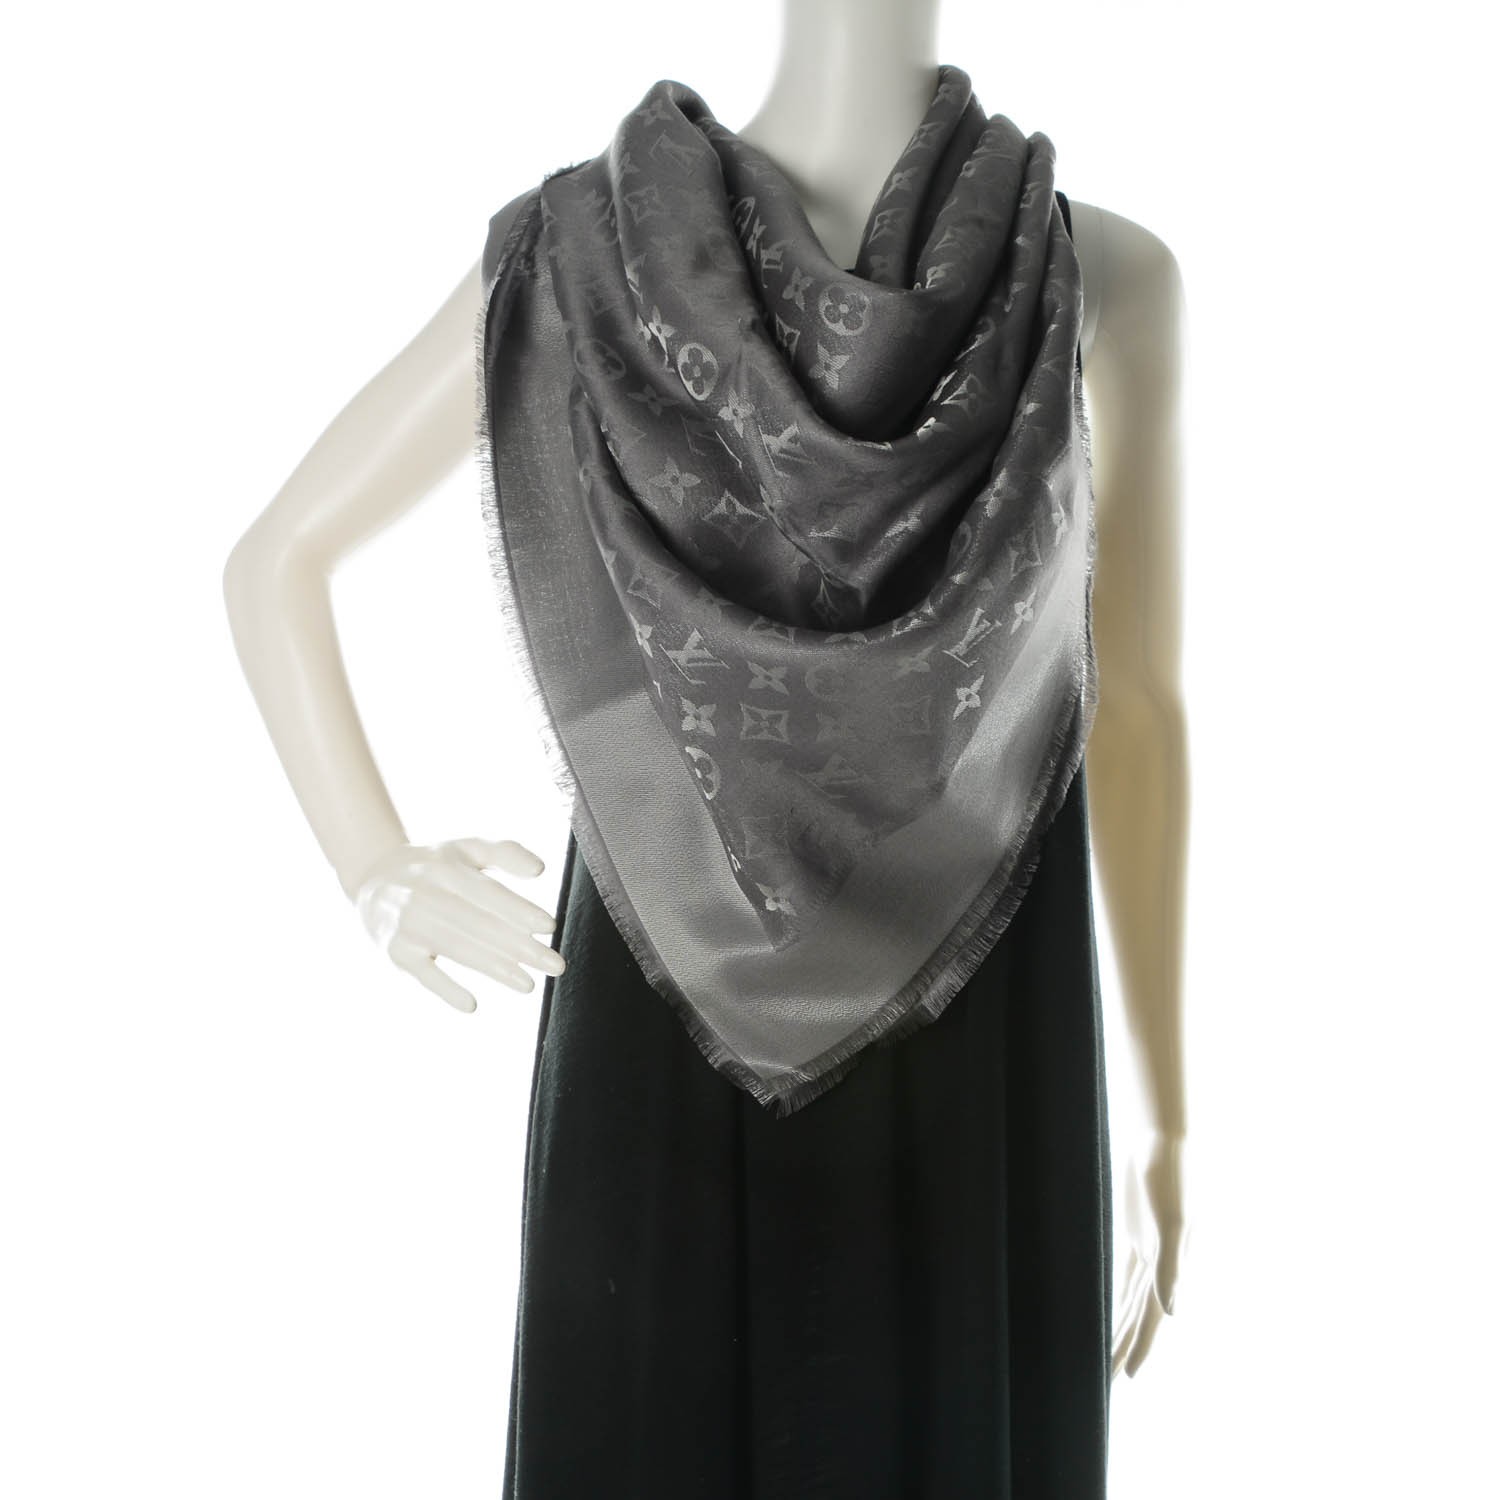 Louis Vuitton charcoal gray monogram shine shawl scarf with black